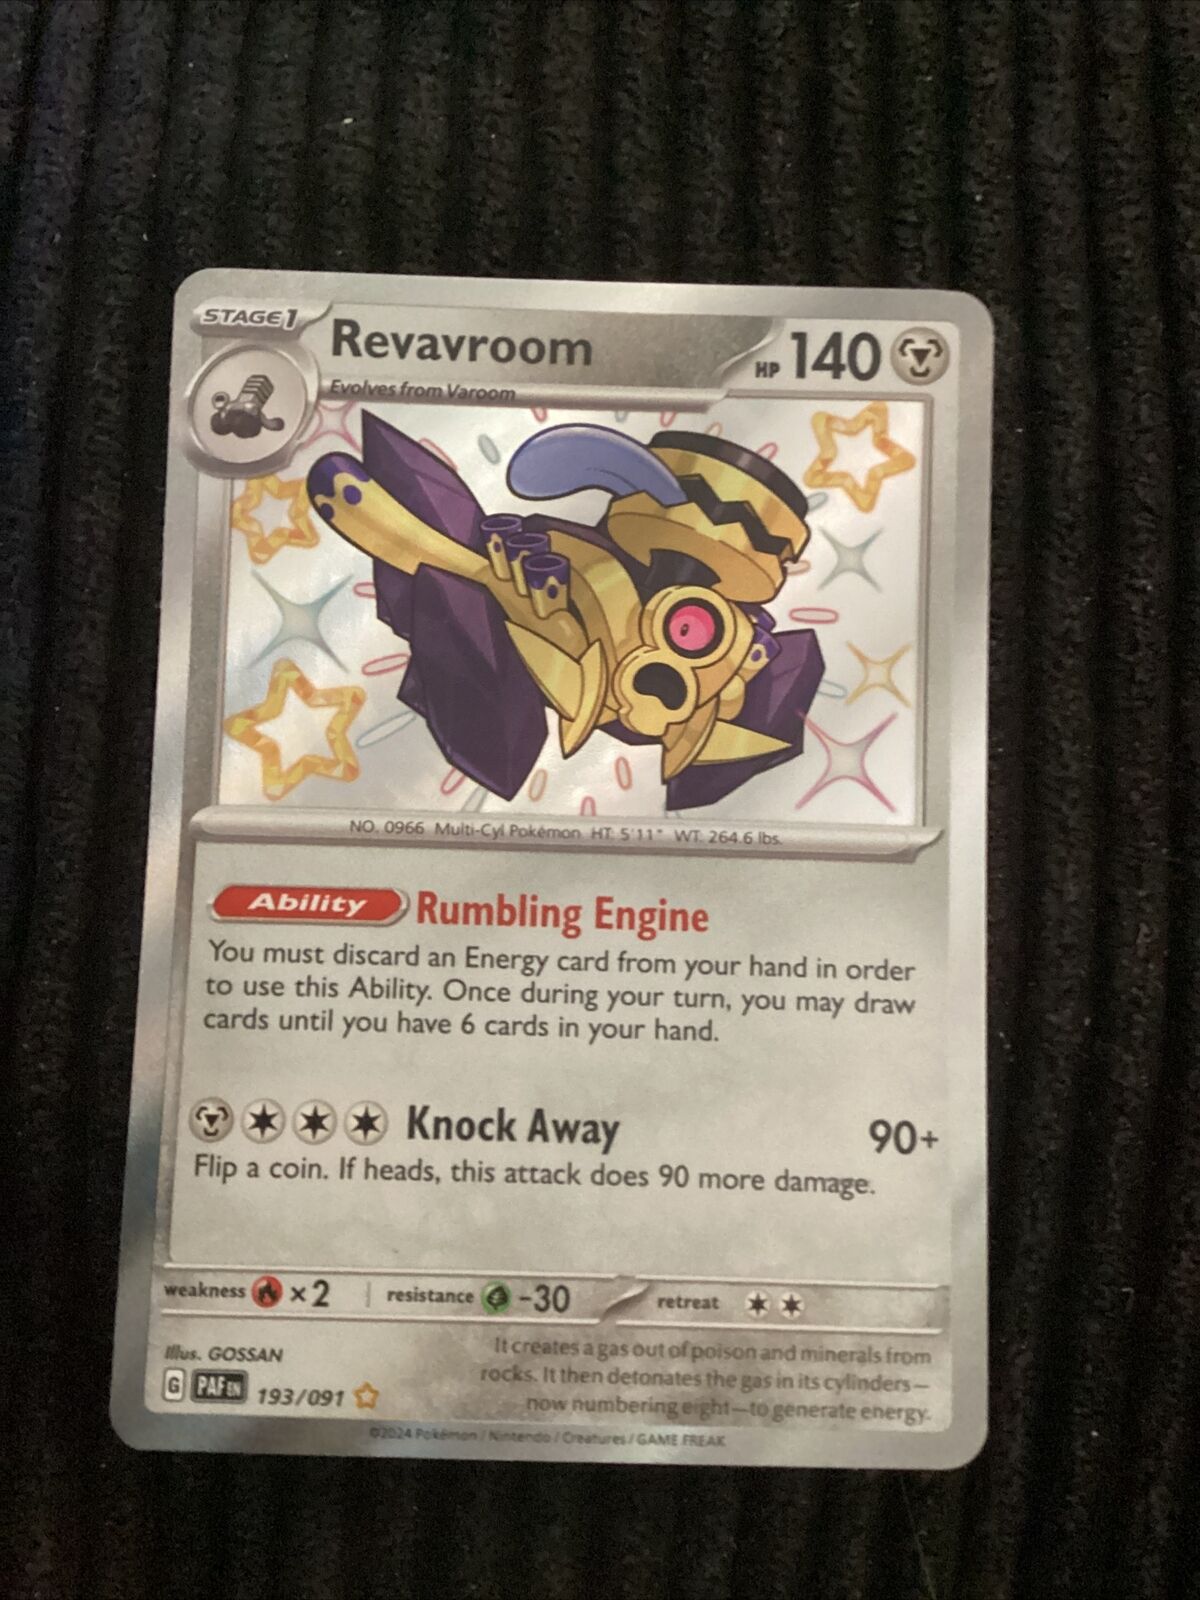 Revaroom Shiny Holo Ultra Rare Pokemon Card 193/091 Paldean Fates - NM